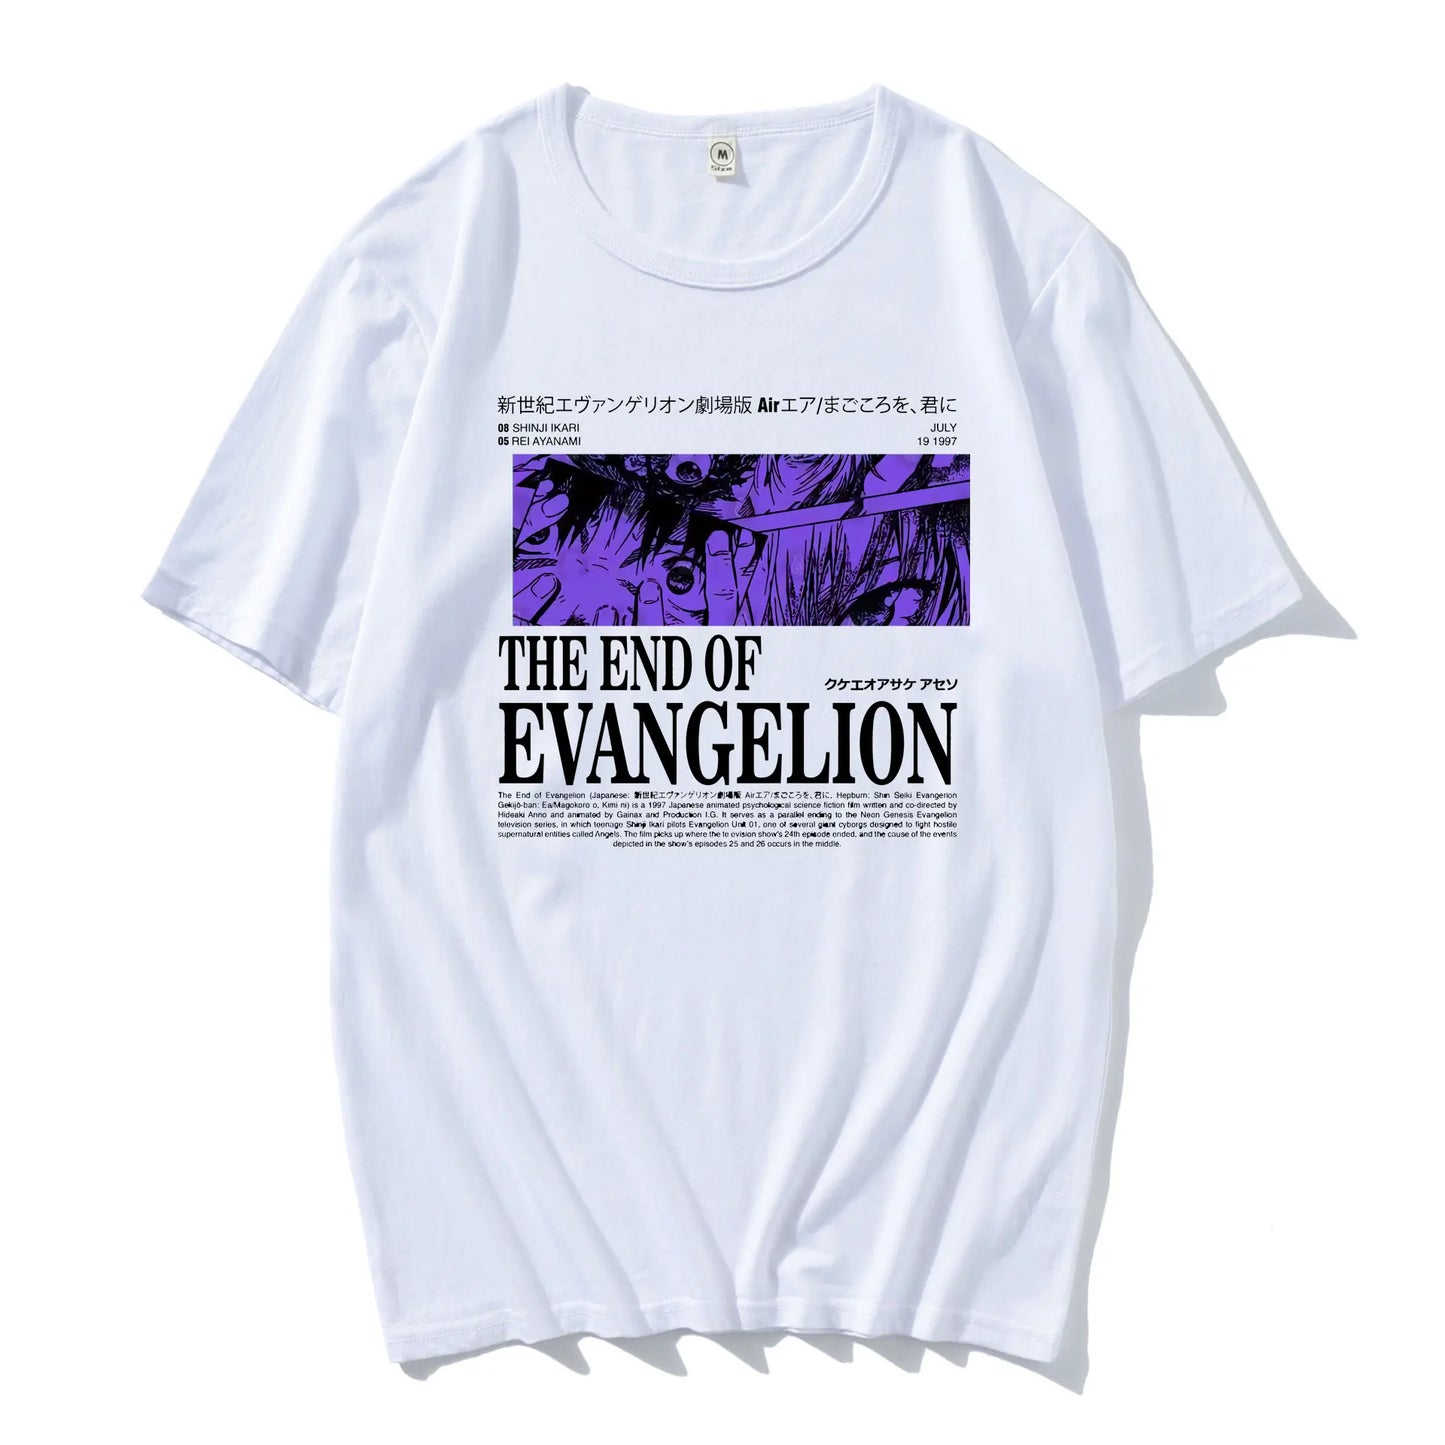 The End of Evangelion Tshirt White